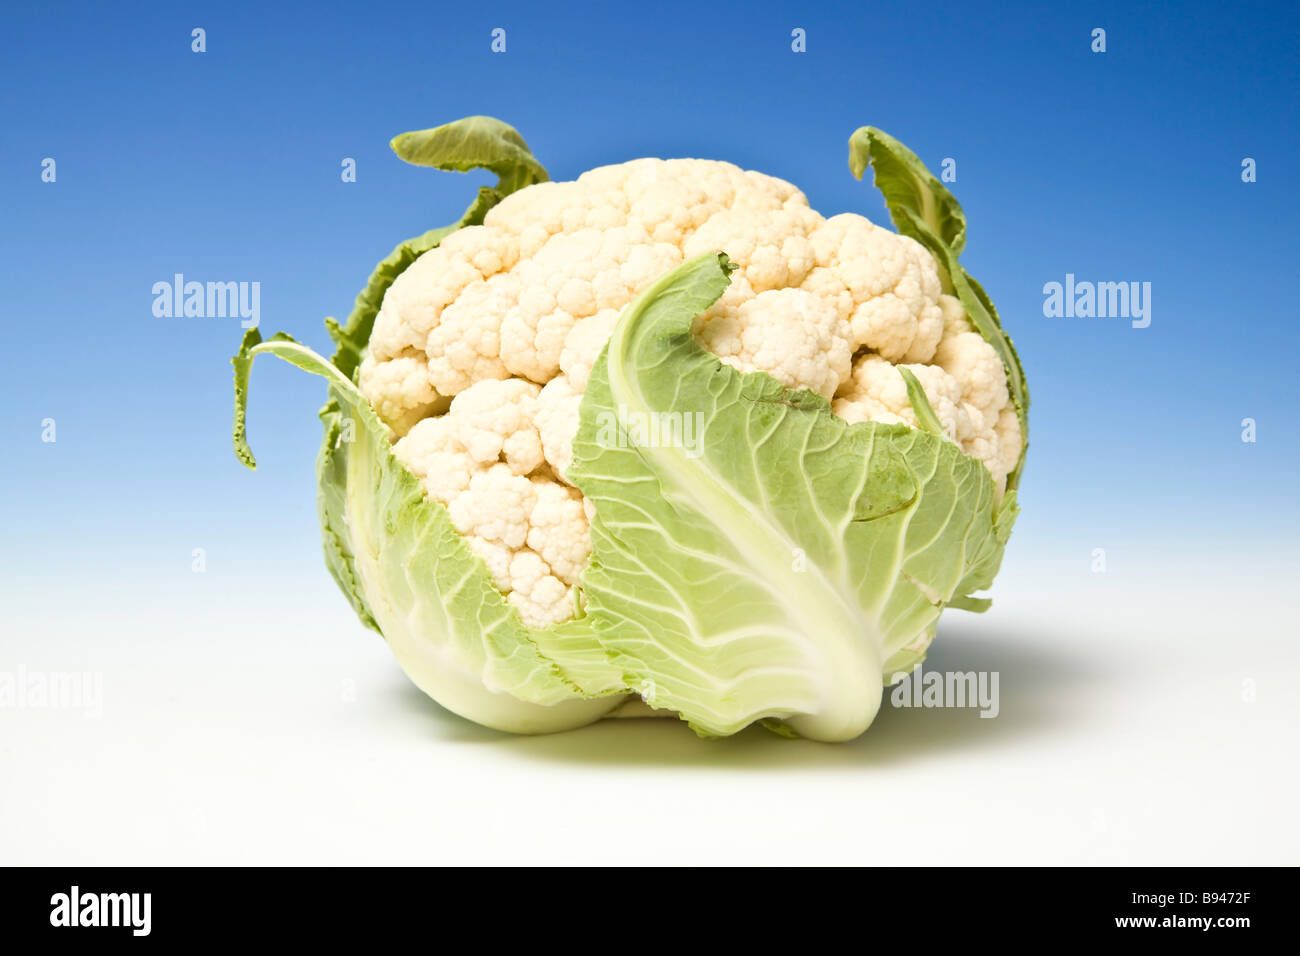 Whole cauliflower on a blue studio background. Stock Photo